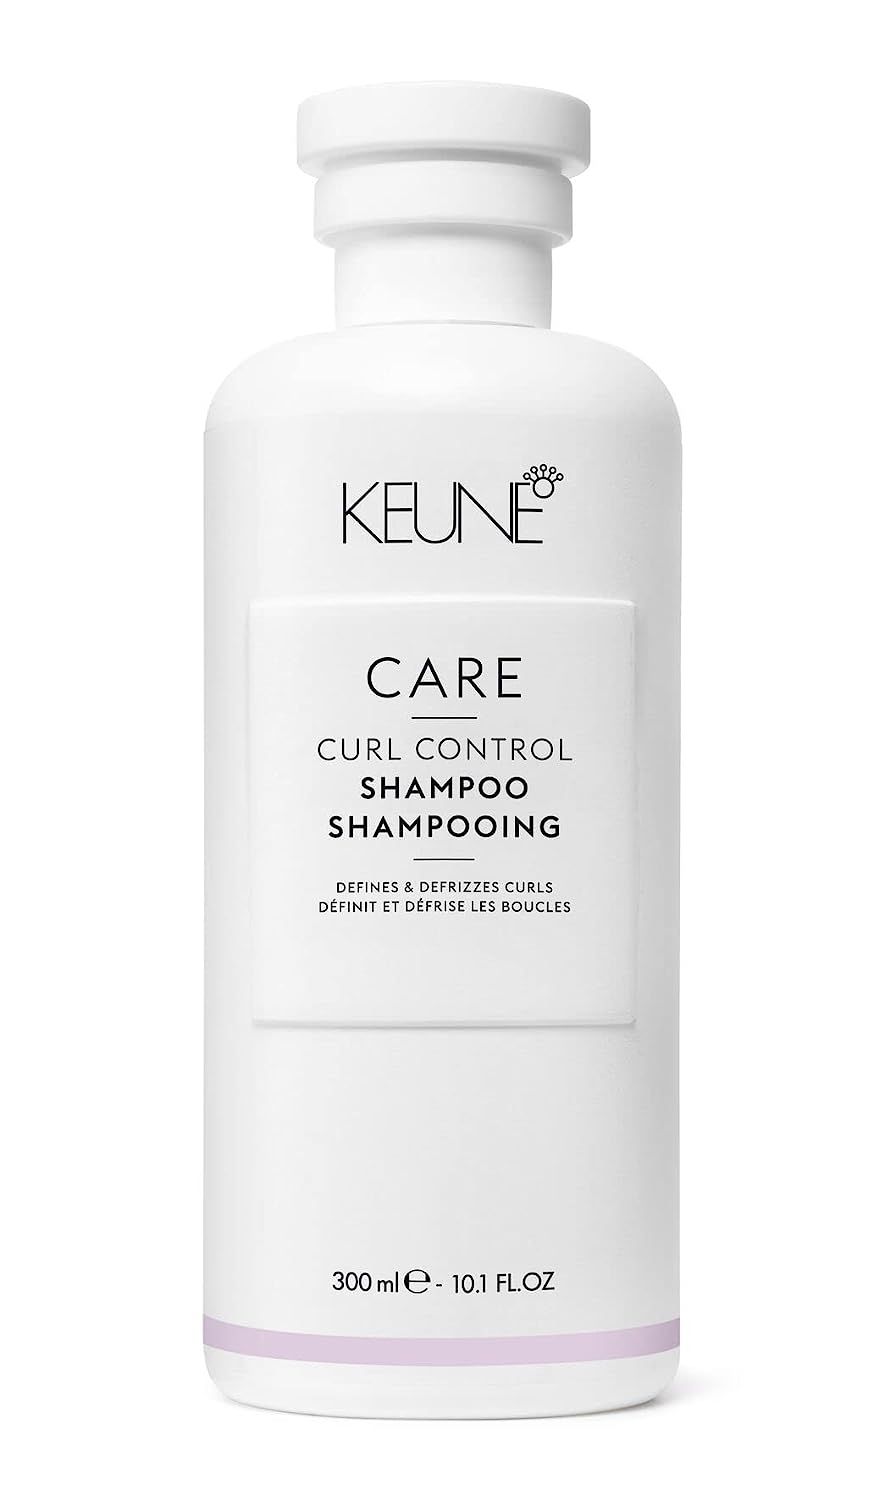 Curl Control Shampoo - Keune Care